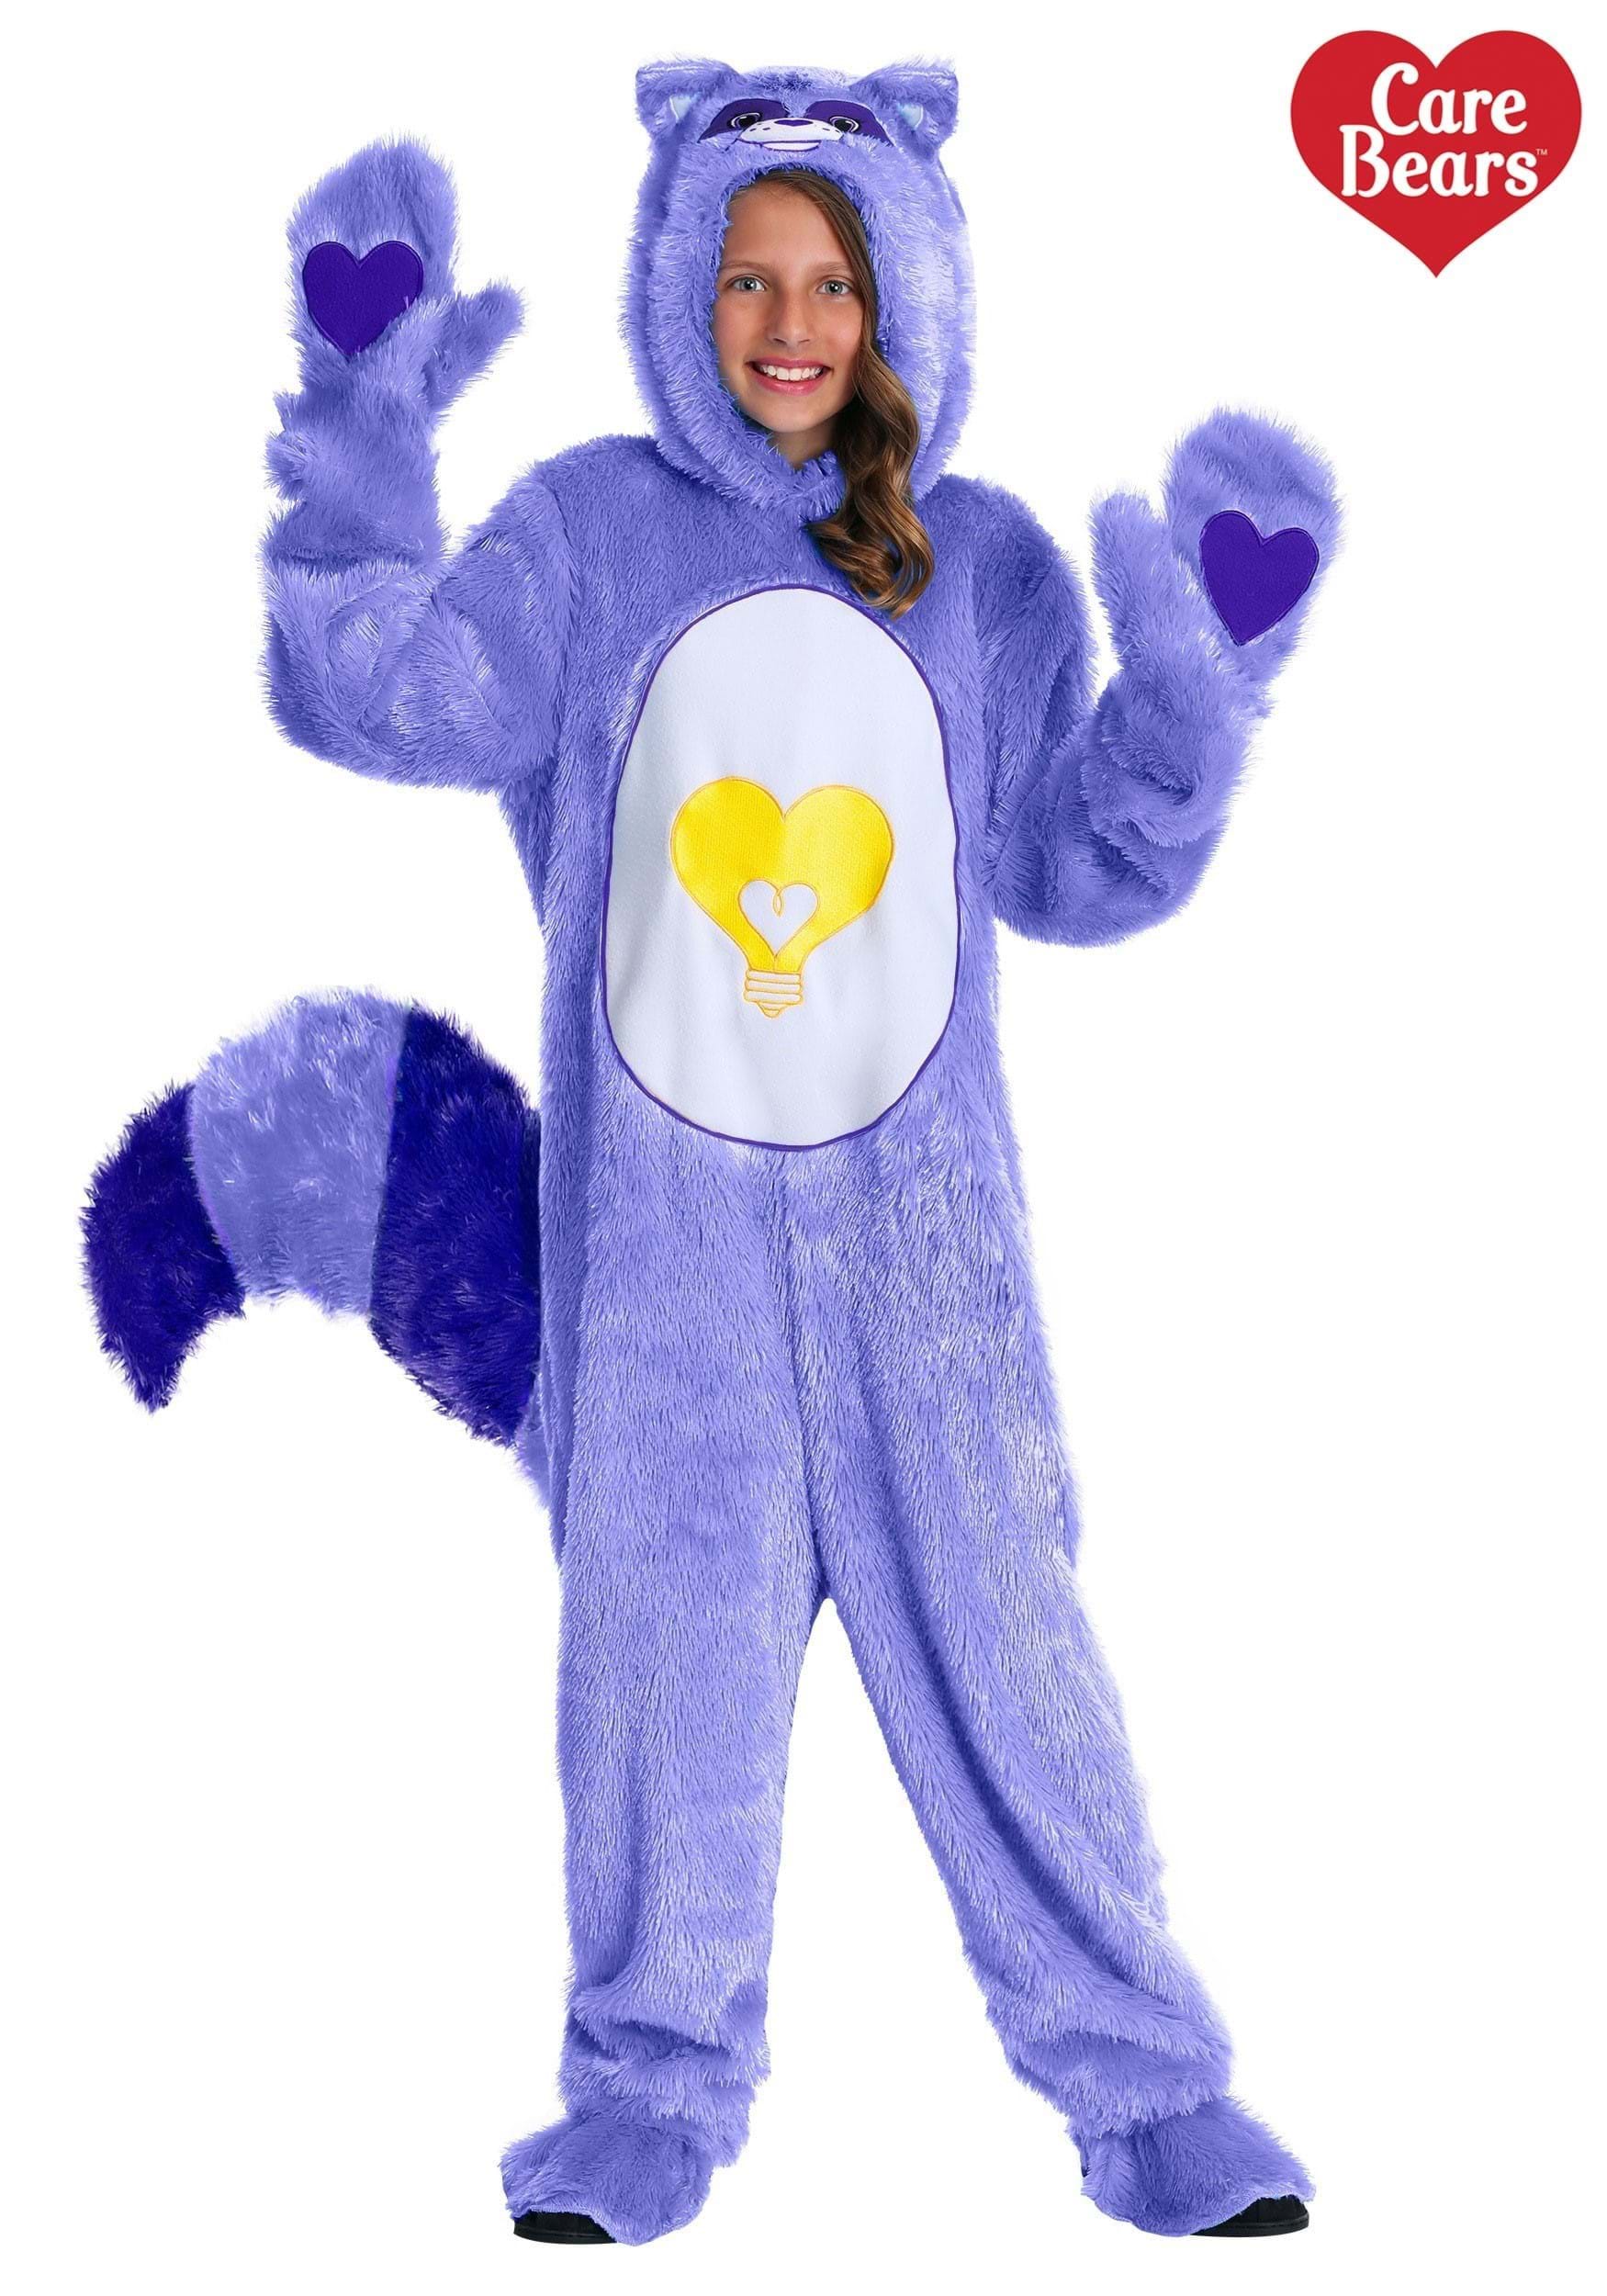 Photos - Fancy Dress Bright FUN Costumes Care Bears & Cousins  Heart Raccoon Child Costume Purpl 